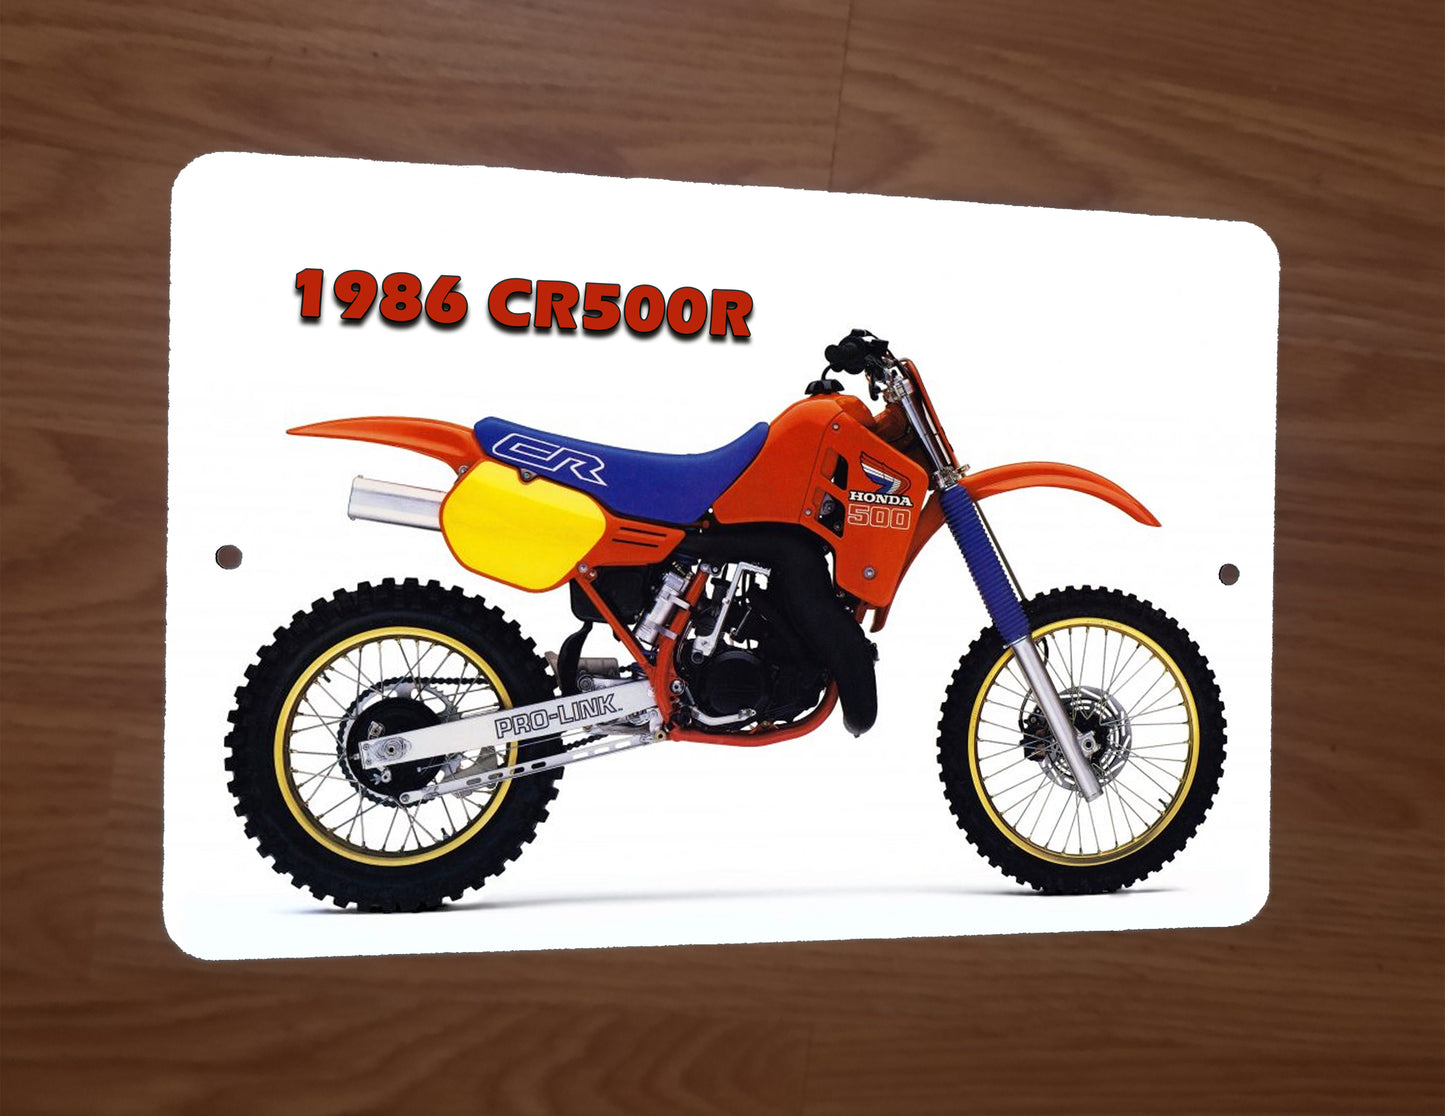 1986 Honda CR500R Dirt Bike Motocross Motorcycle Photo 8x12 Metal Wall Sign Garage Poster